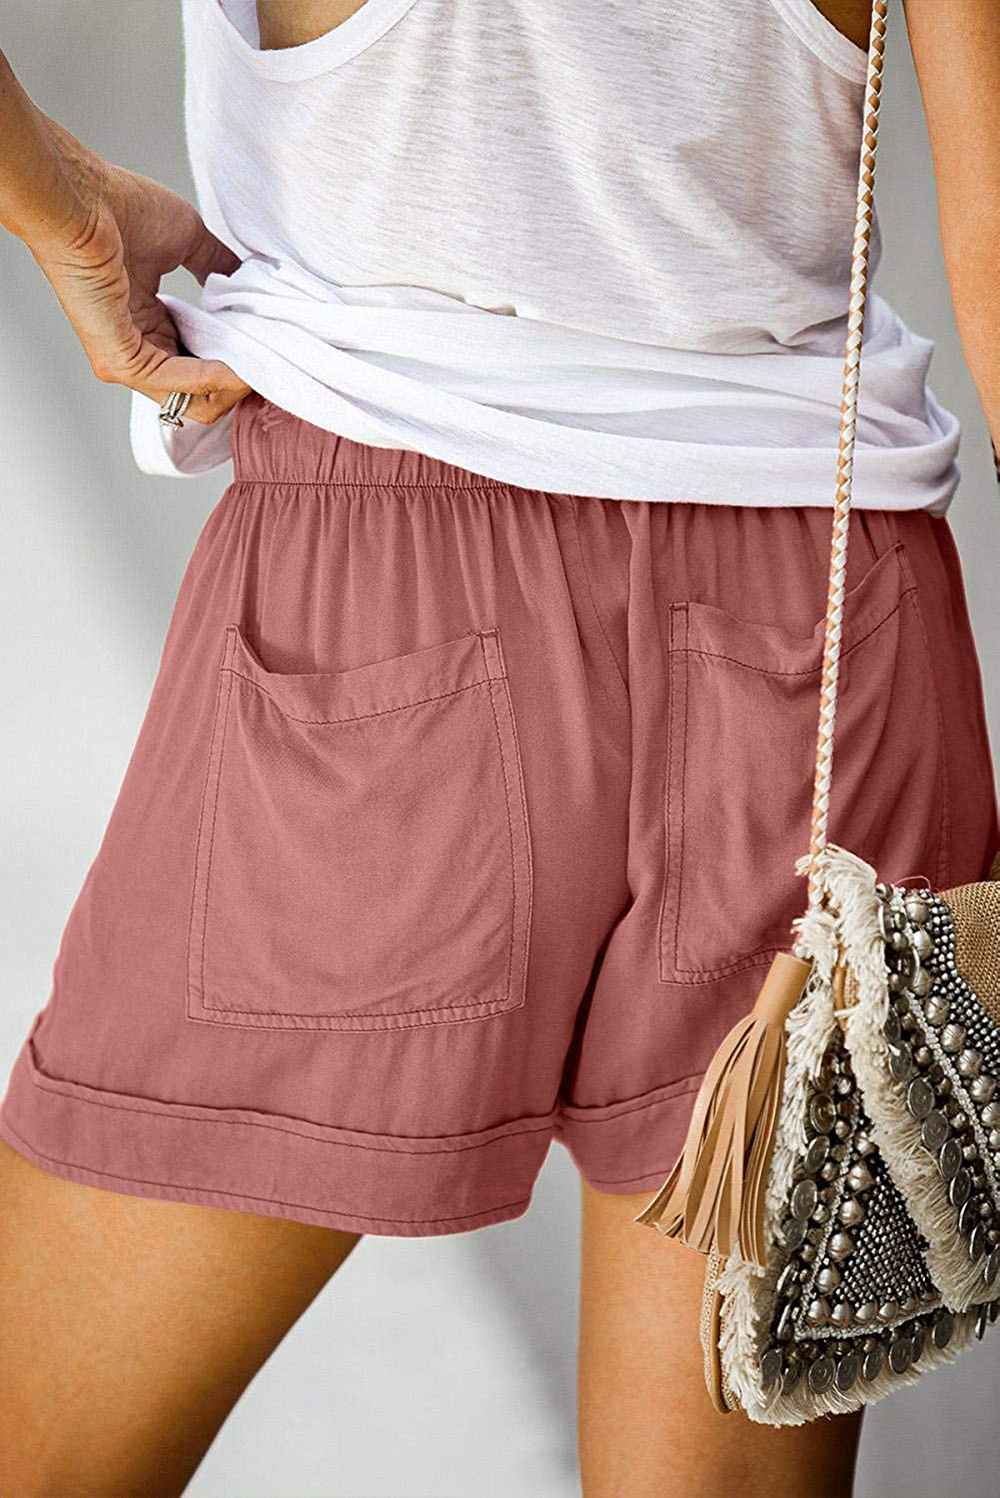 FEKOAFE Comfy Drawstring Casual Elastic Waist Shorts